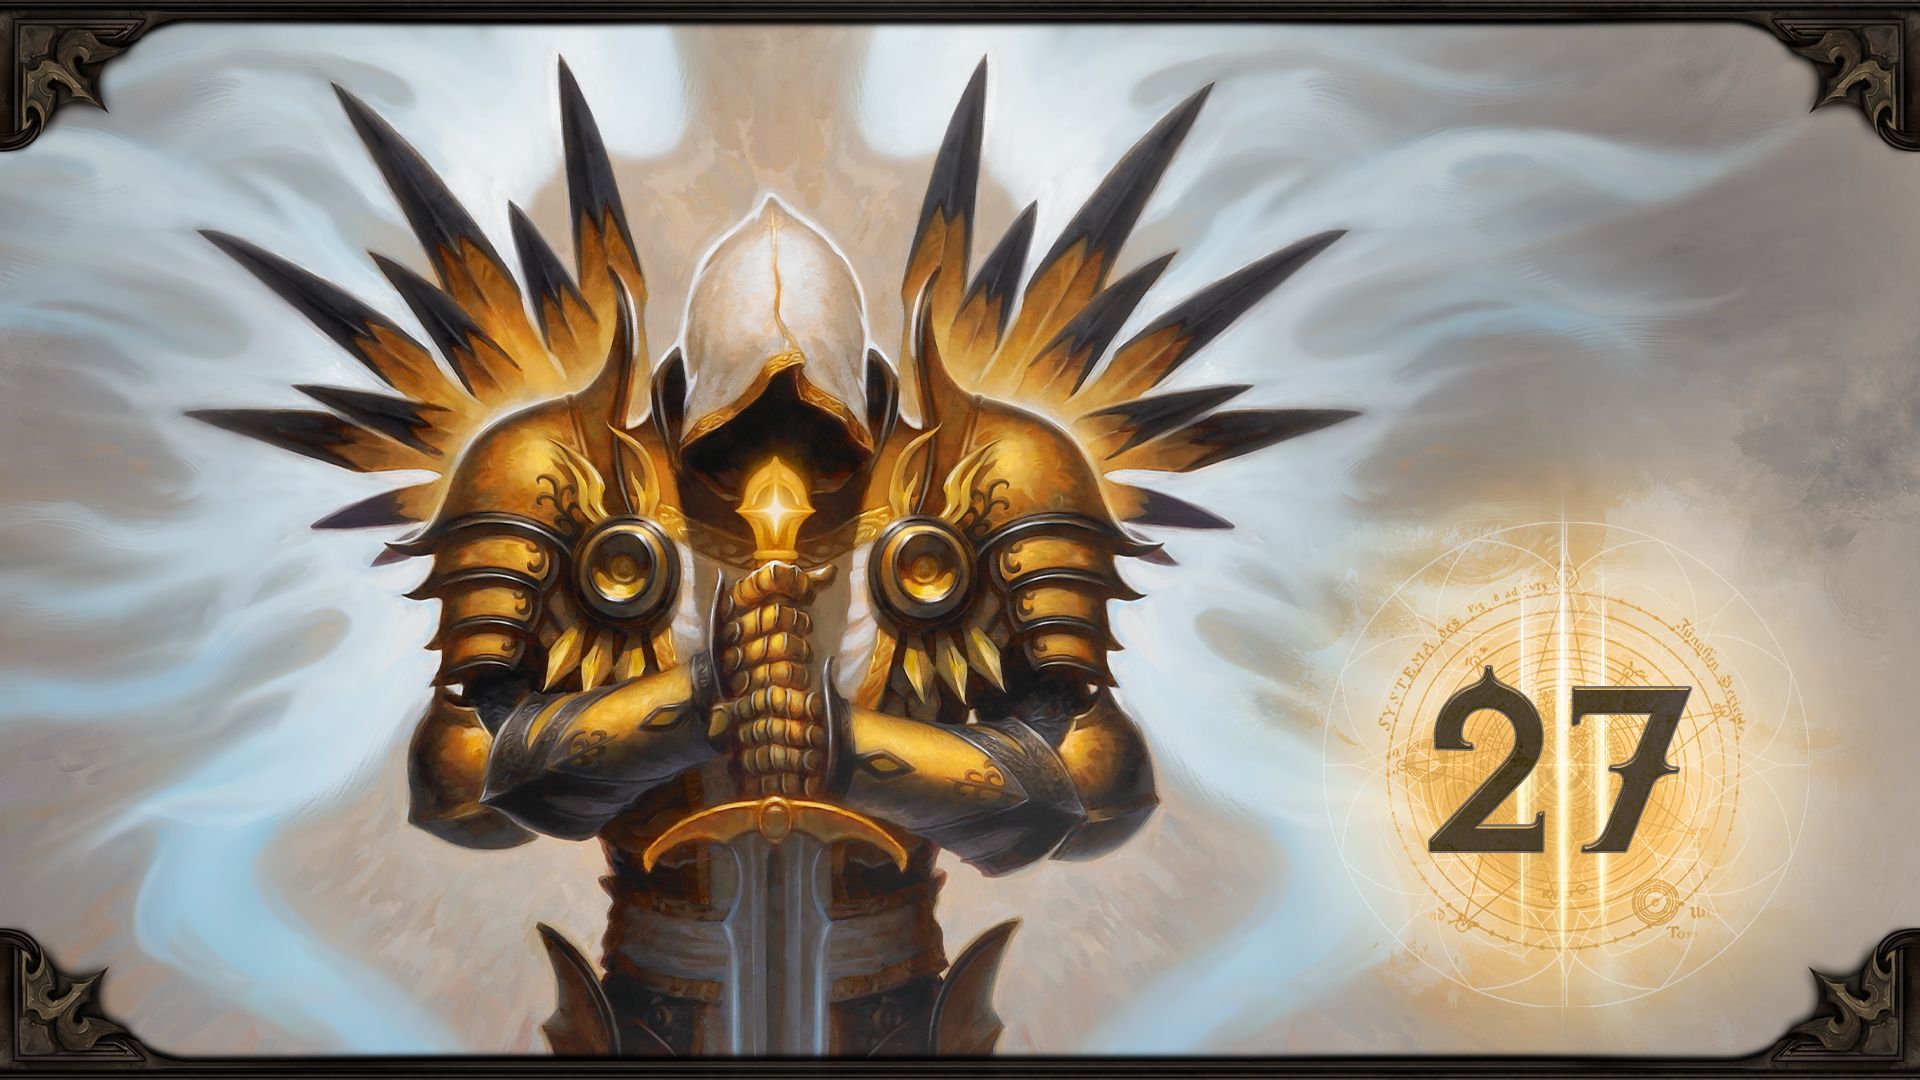 Diablo III Season 27 – The Light’s Calling Begins August 26